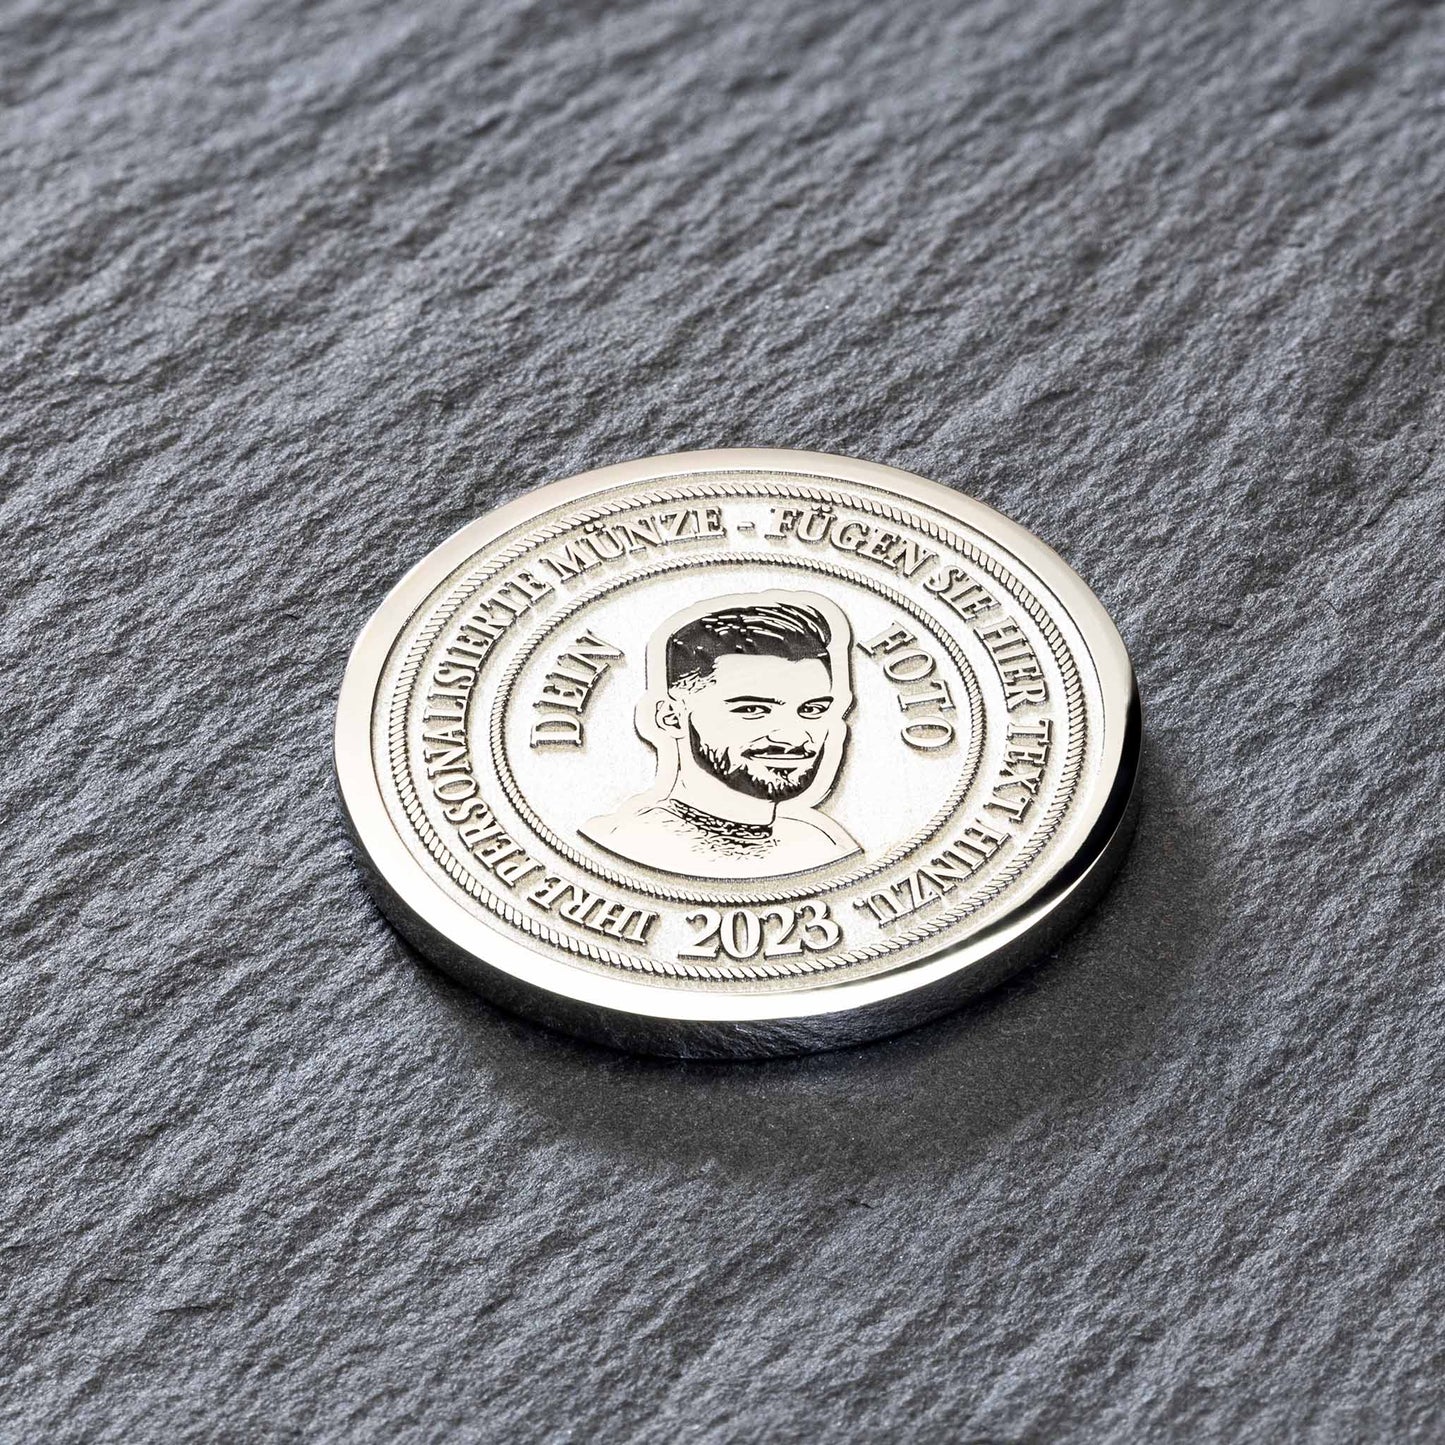 Personalised Coin - A Unique Token for Memorable Moments - seQua.Shop